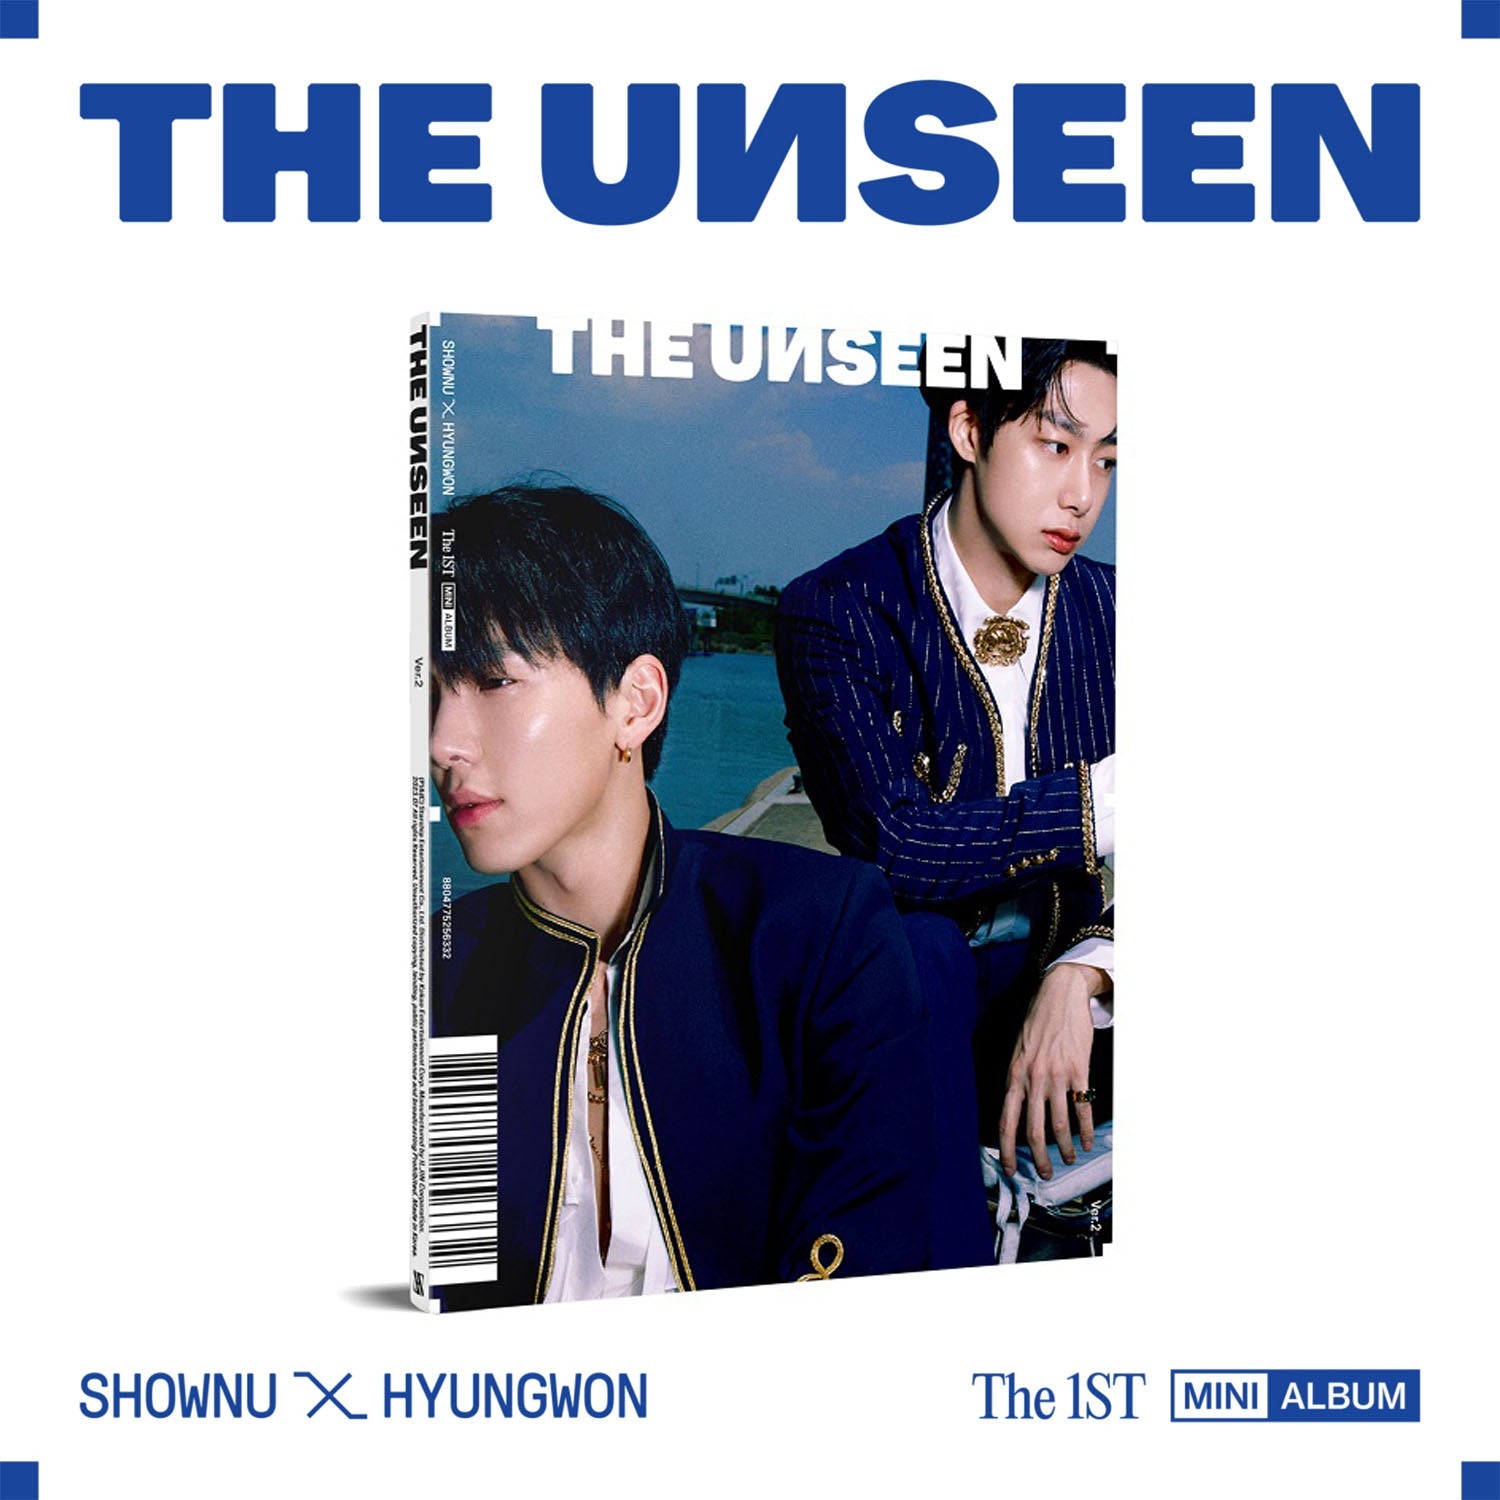 SHOWNU X HYUNGWON 1ST MINI ALBUM 'THE UNSEEN' VERSION 2 COVER